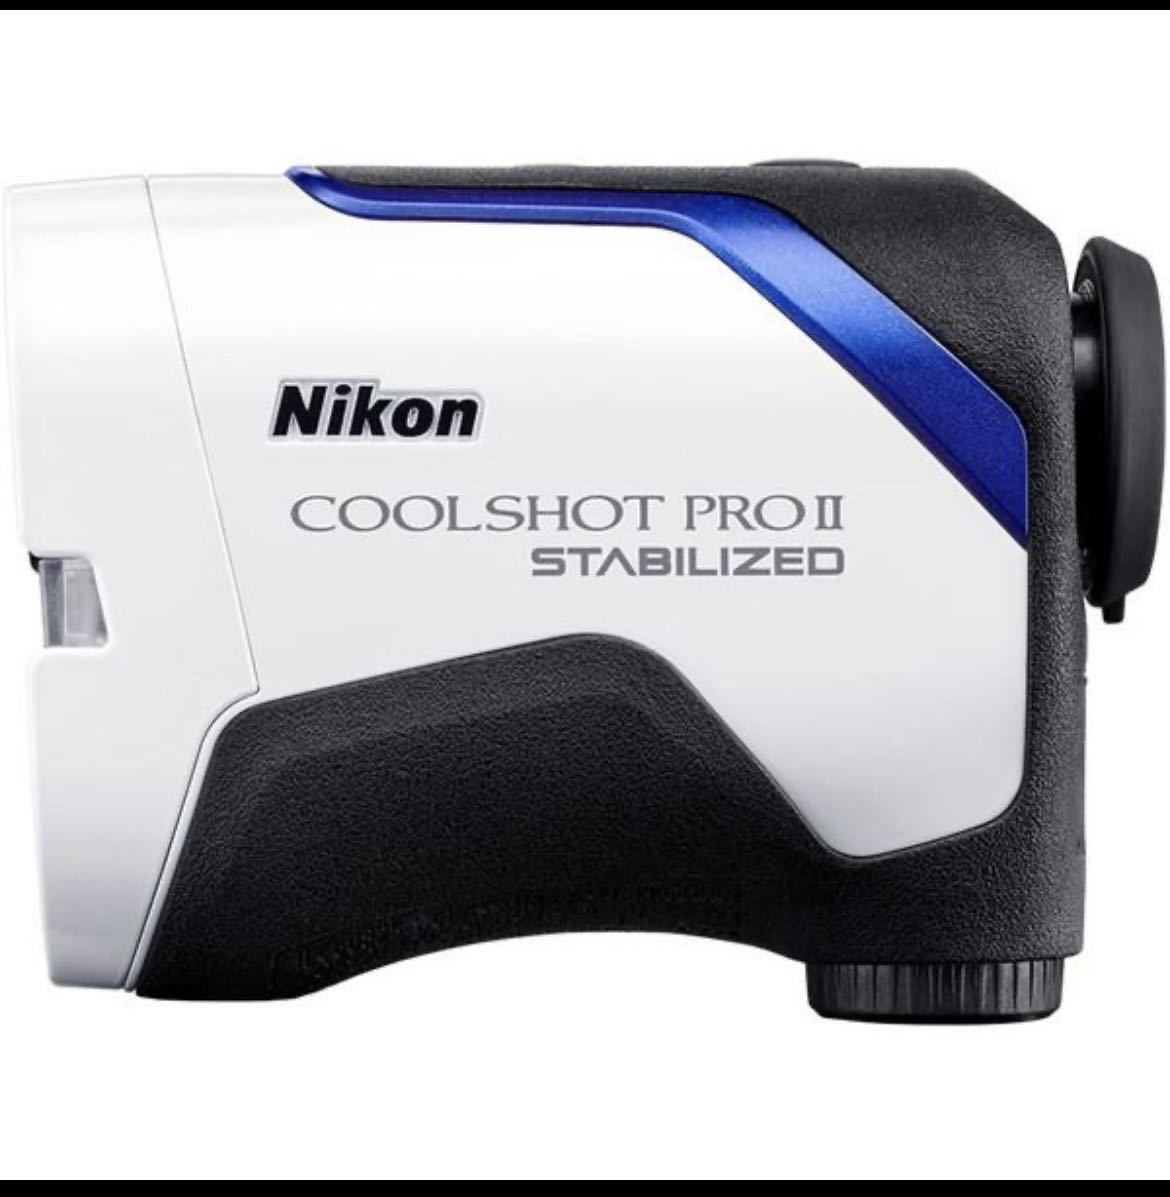 ◆ Nikon クールショットプロ2スタビライズドゴルフ用レーザー距離計 / _画像3